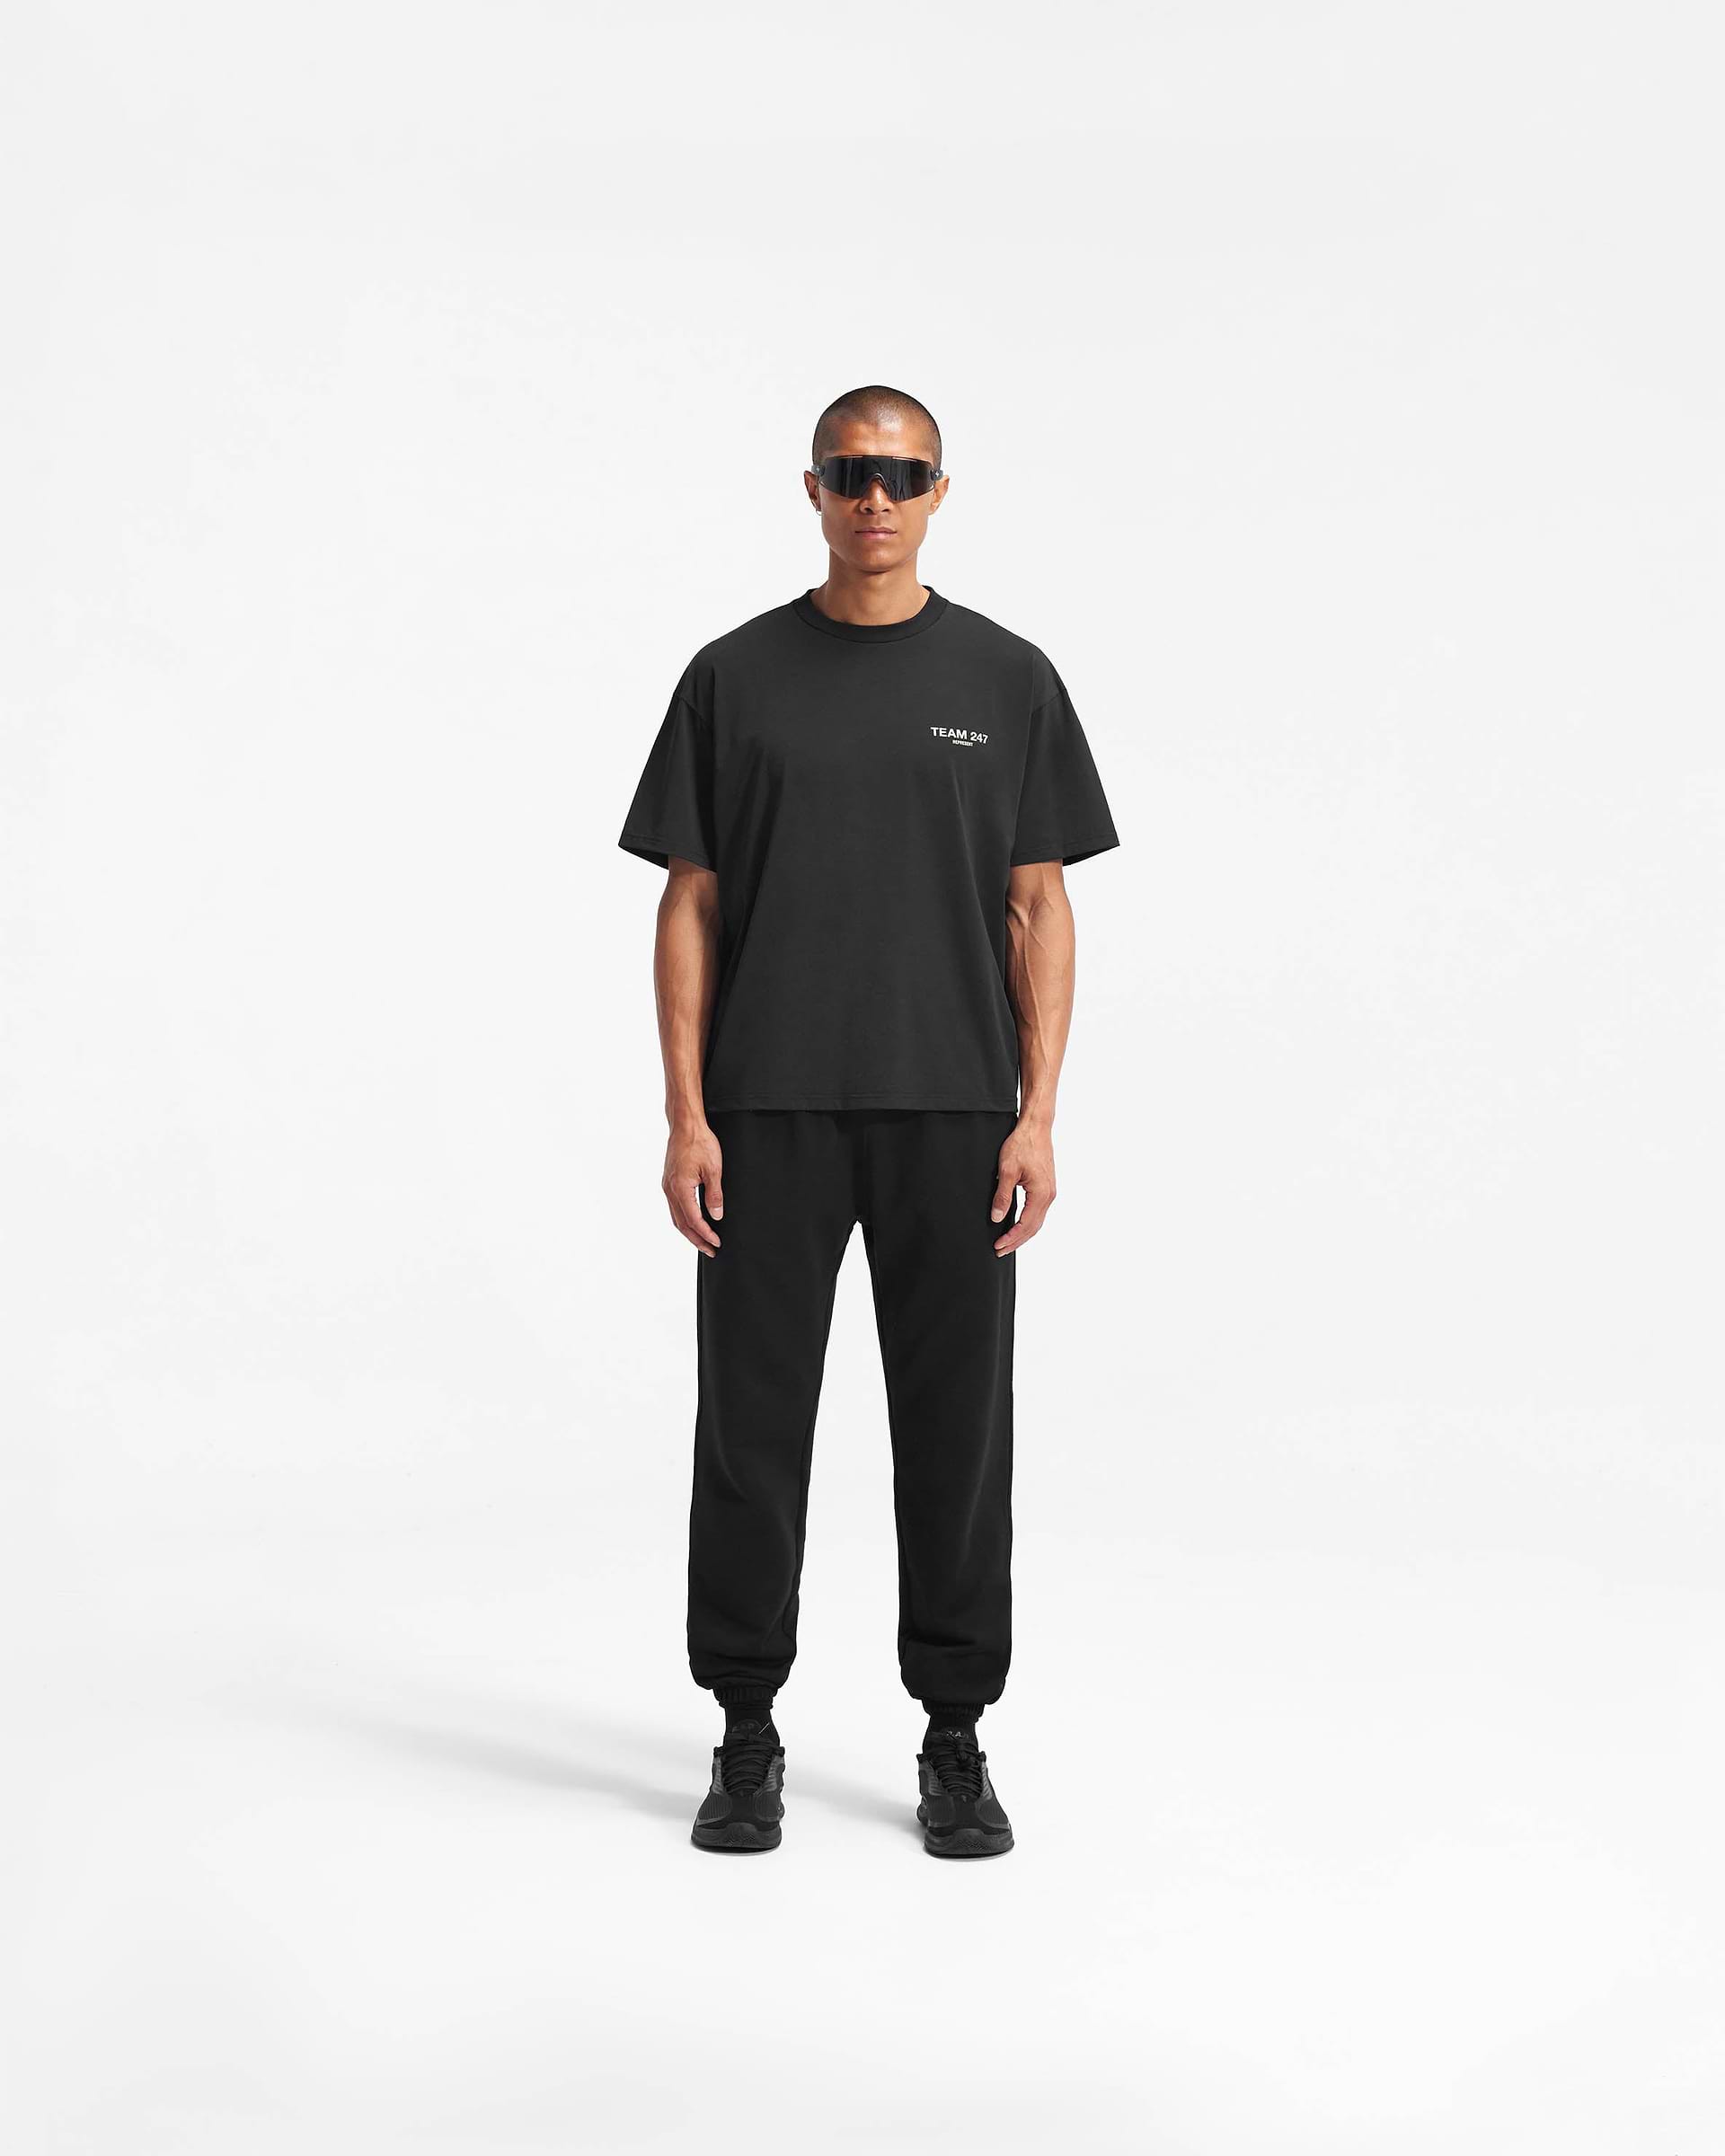 Black | CLO REPRESENT 247 | Oversized T-Shirt Team